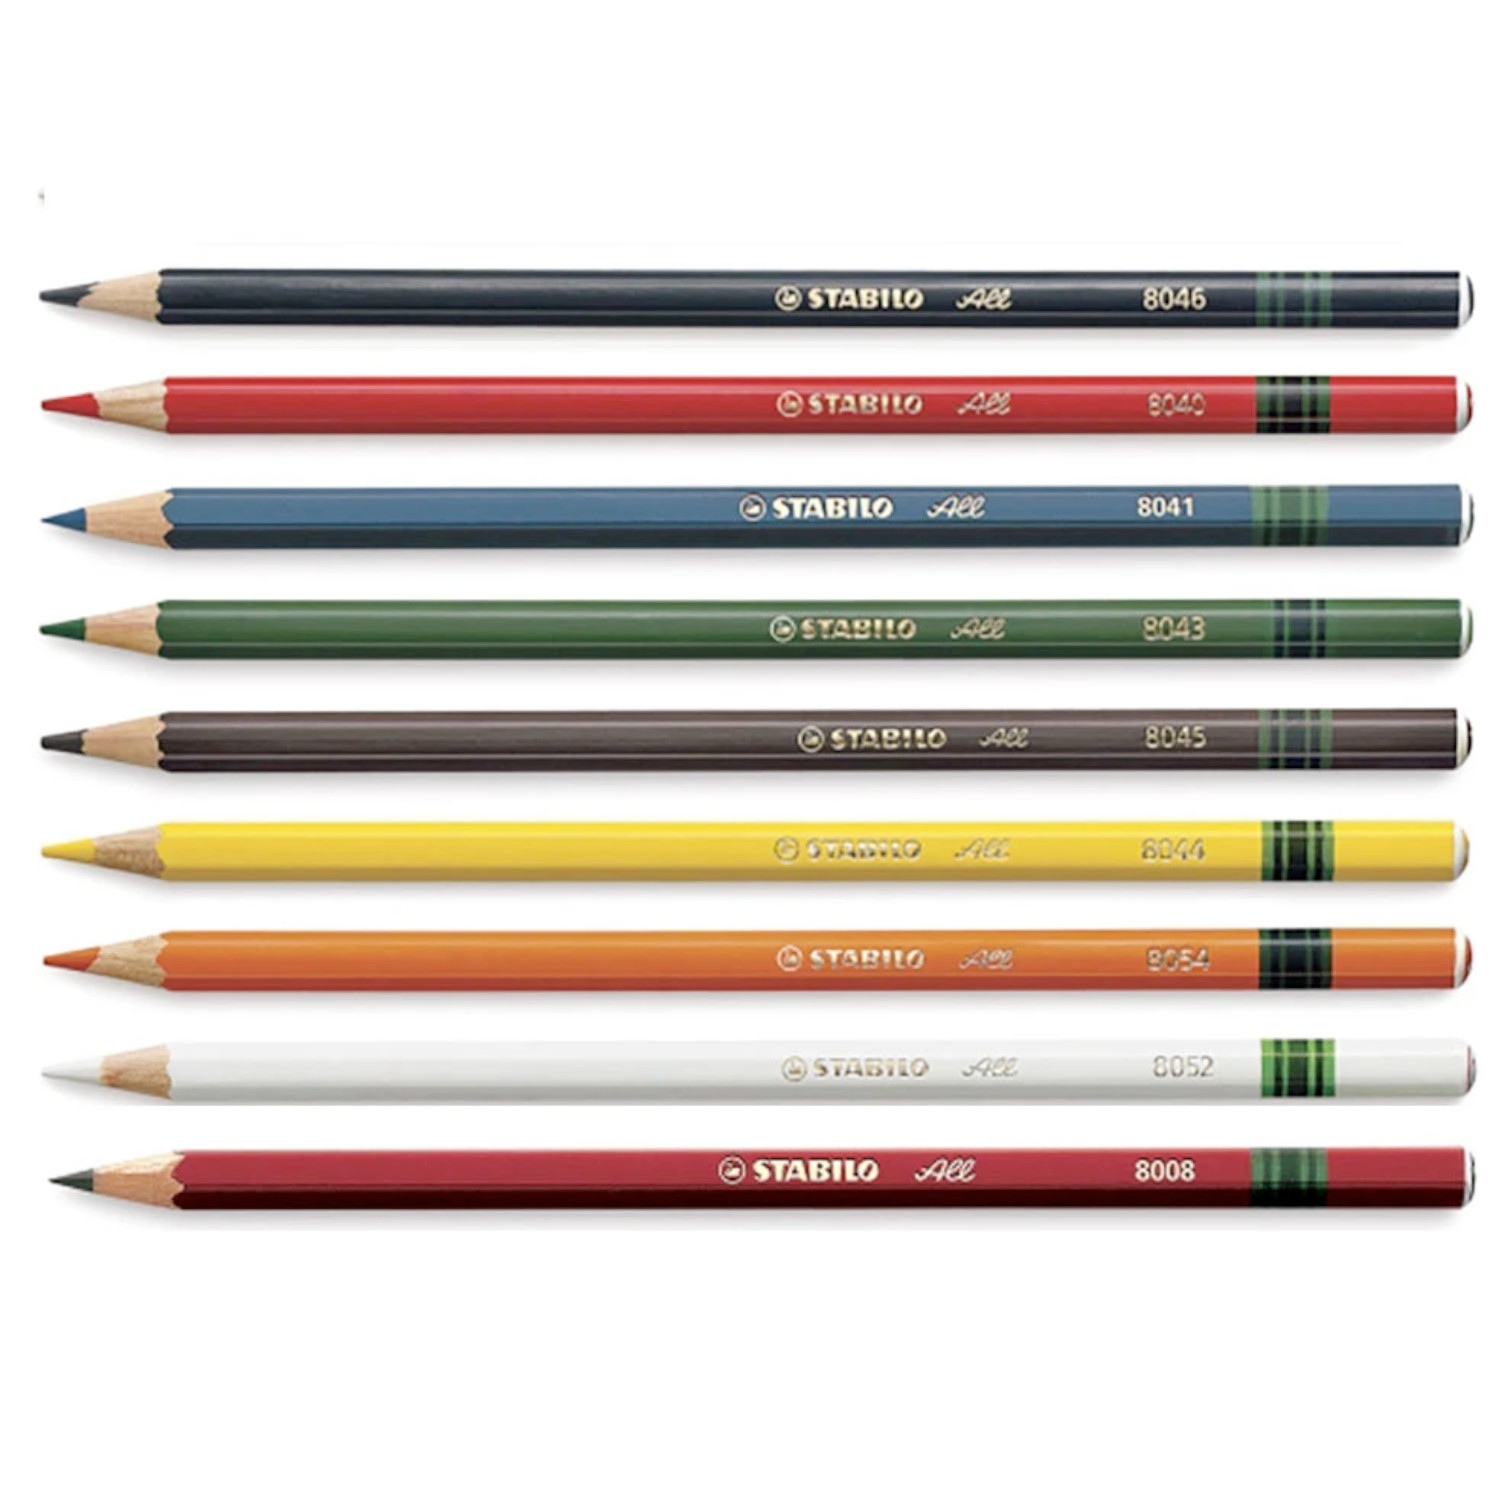 STABILO ALL Marking Pencils